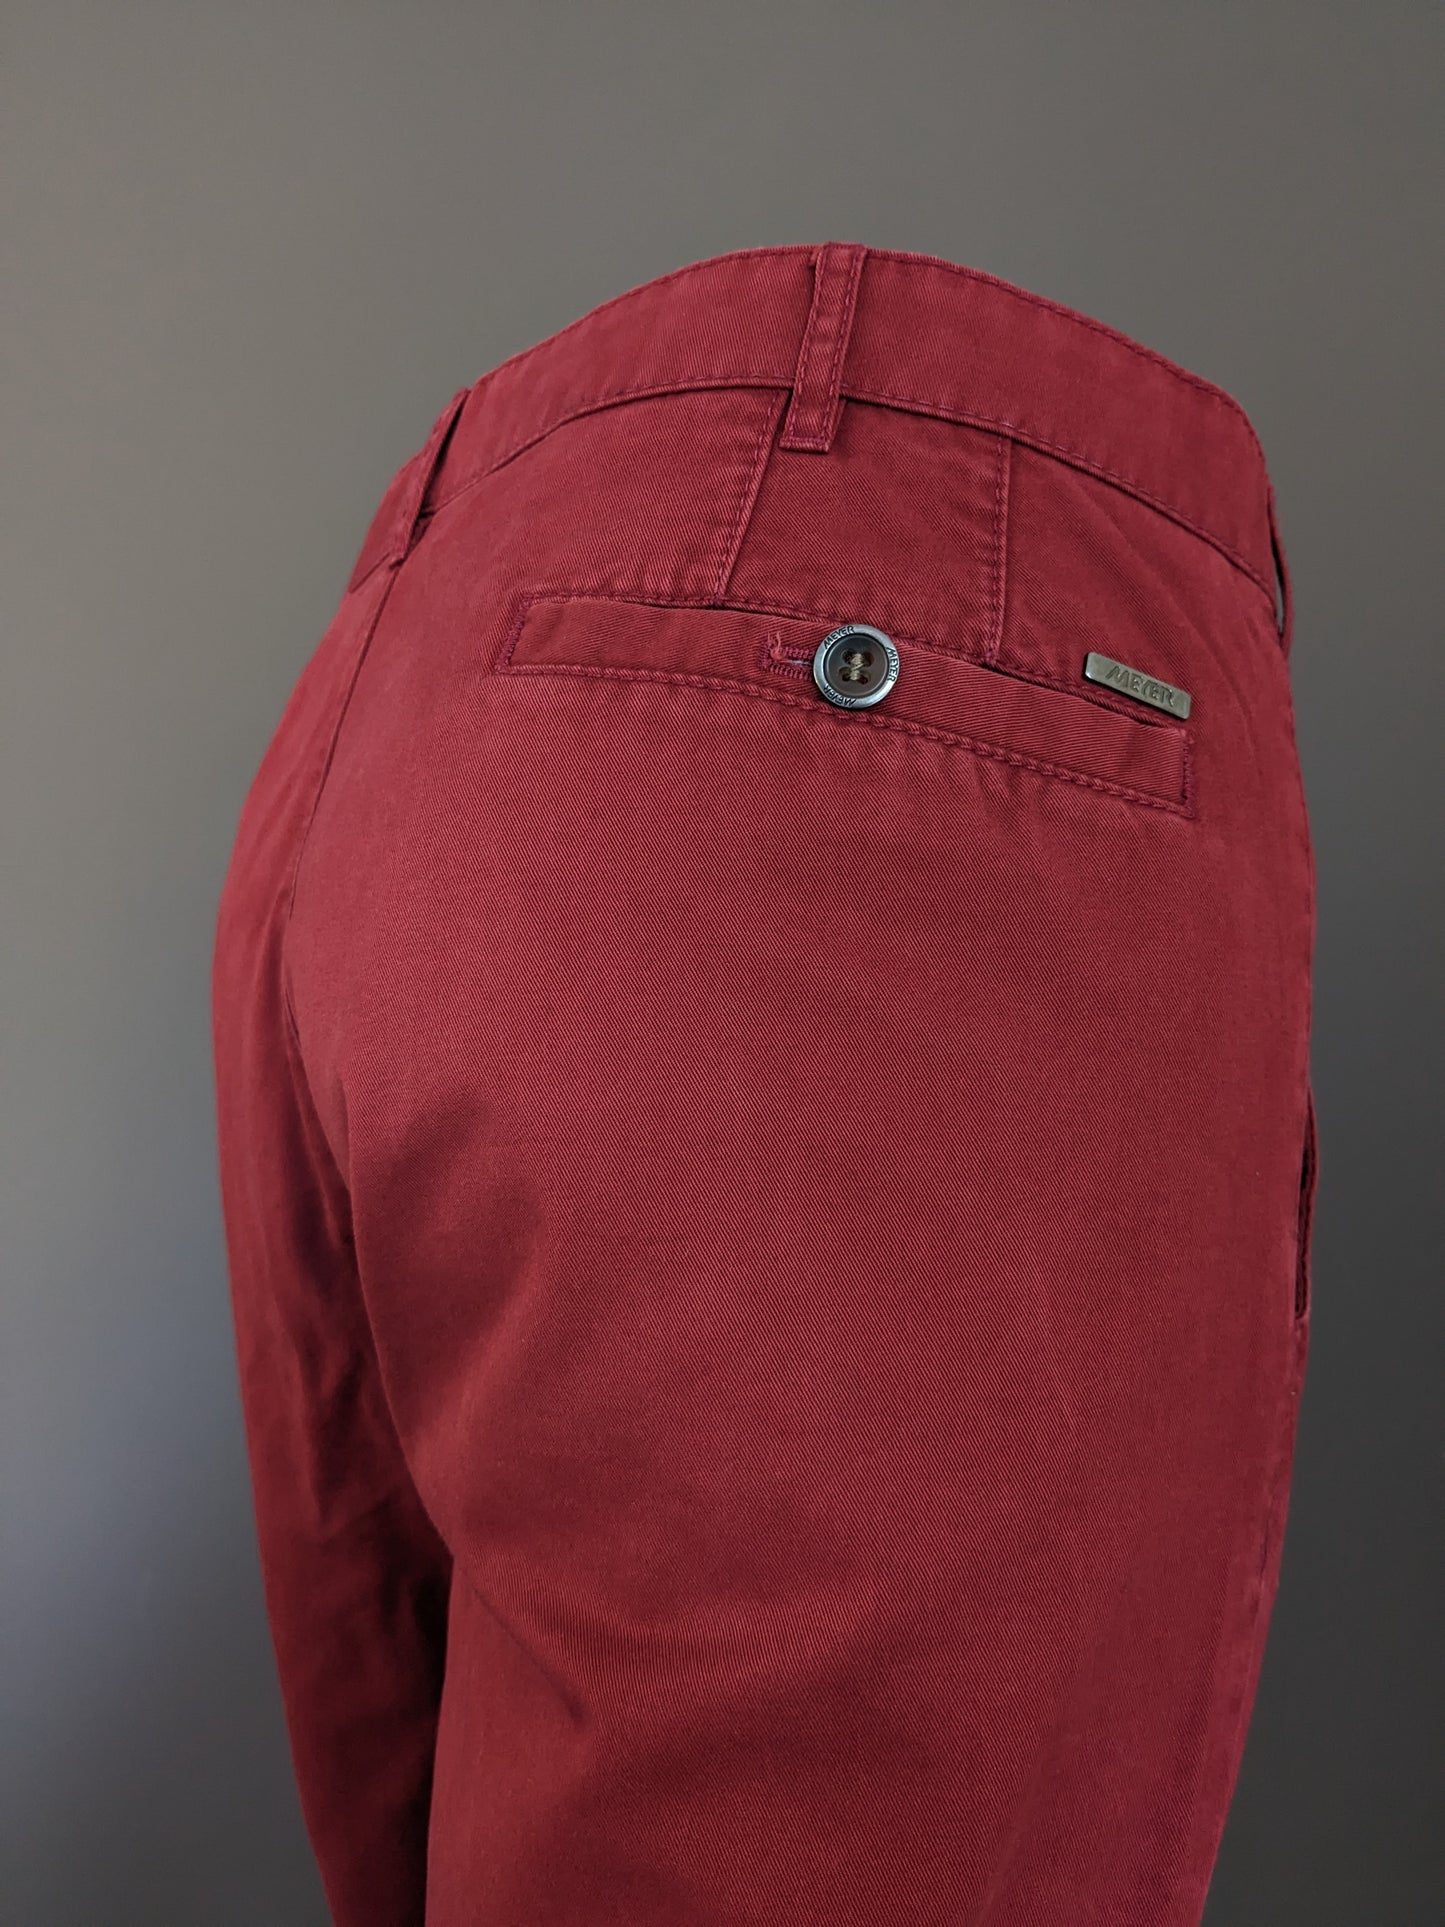 Meyer broek / pantalon. Rood gekleurd. Maat 27 (54 / L). Modern Comfort.